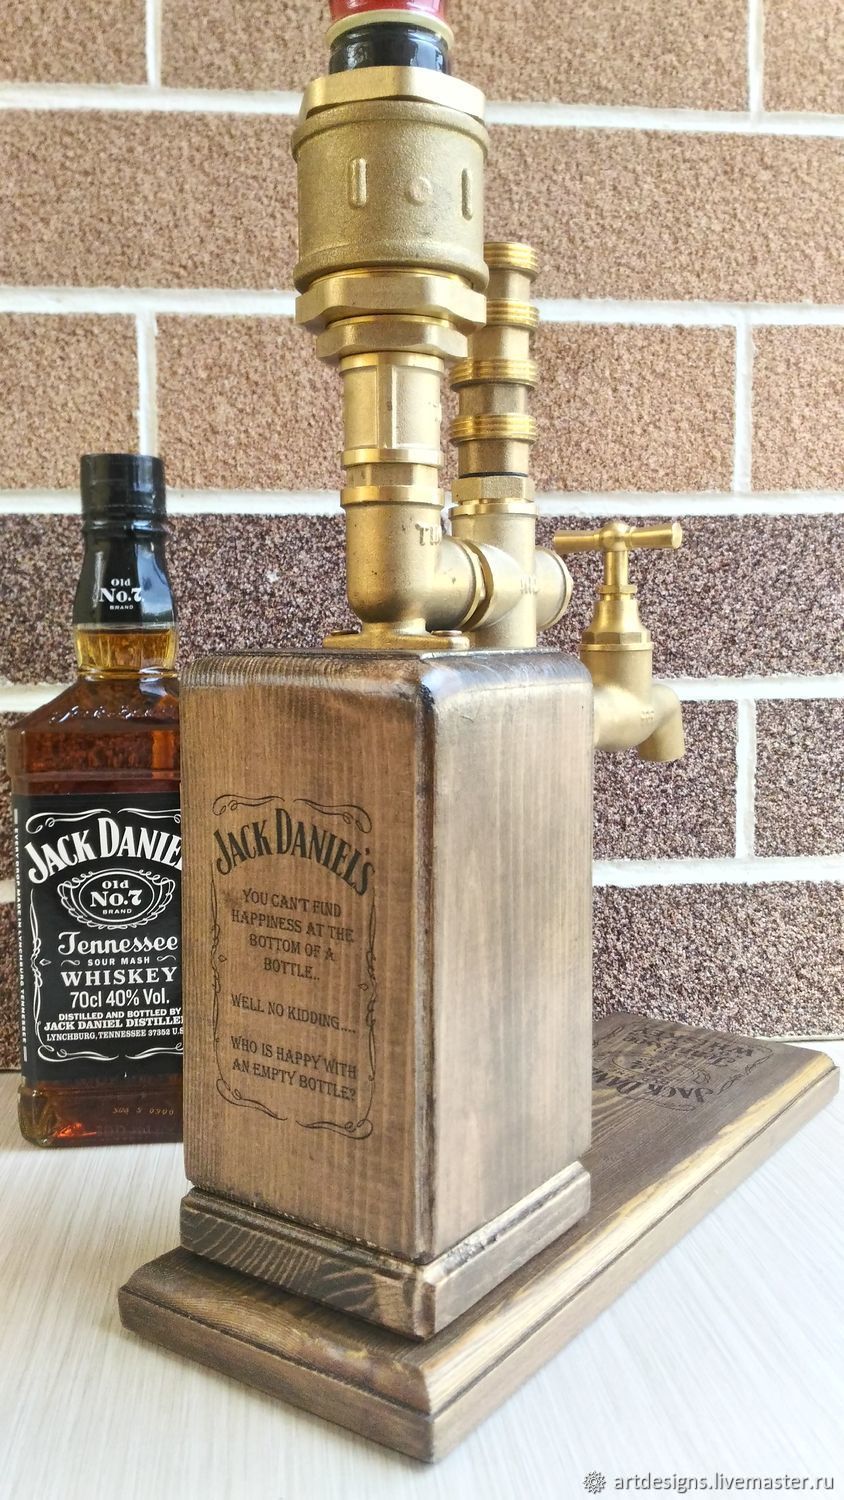 Диспенсер виски Jack Daniel's